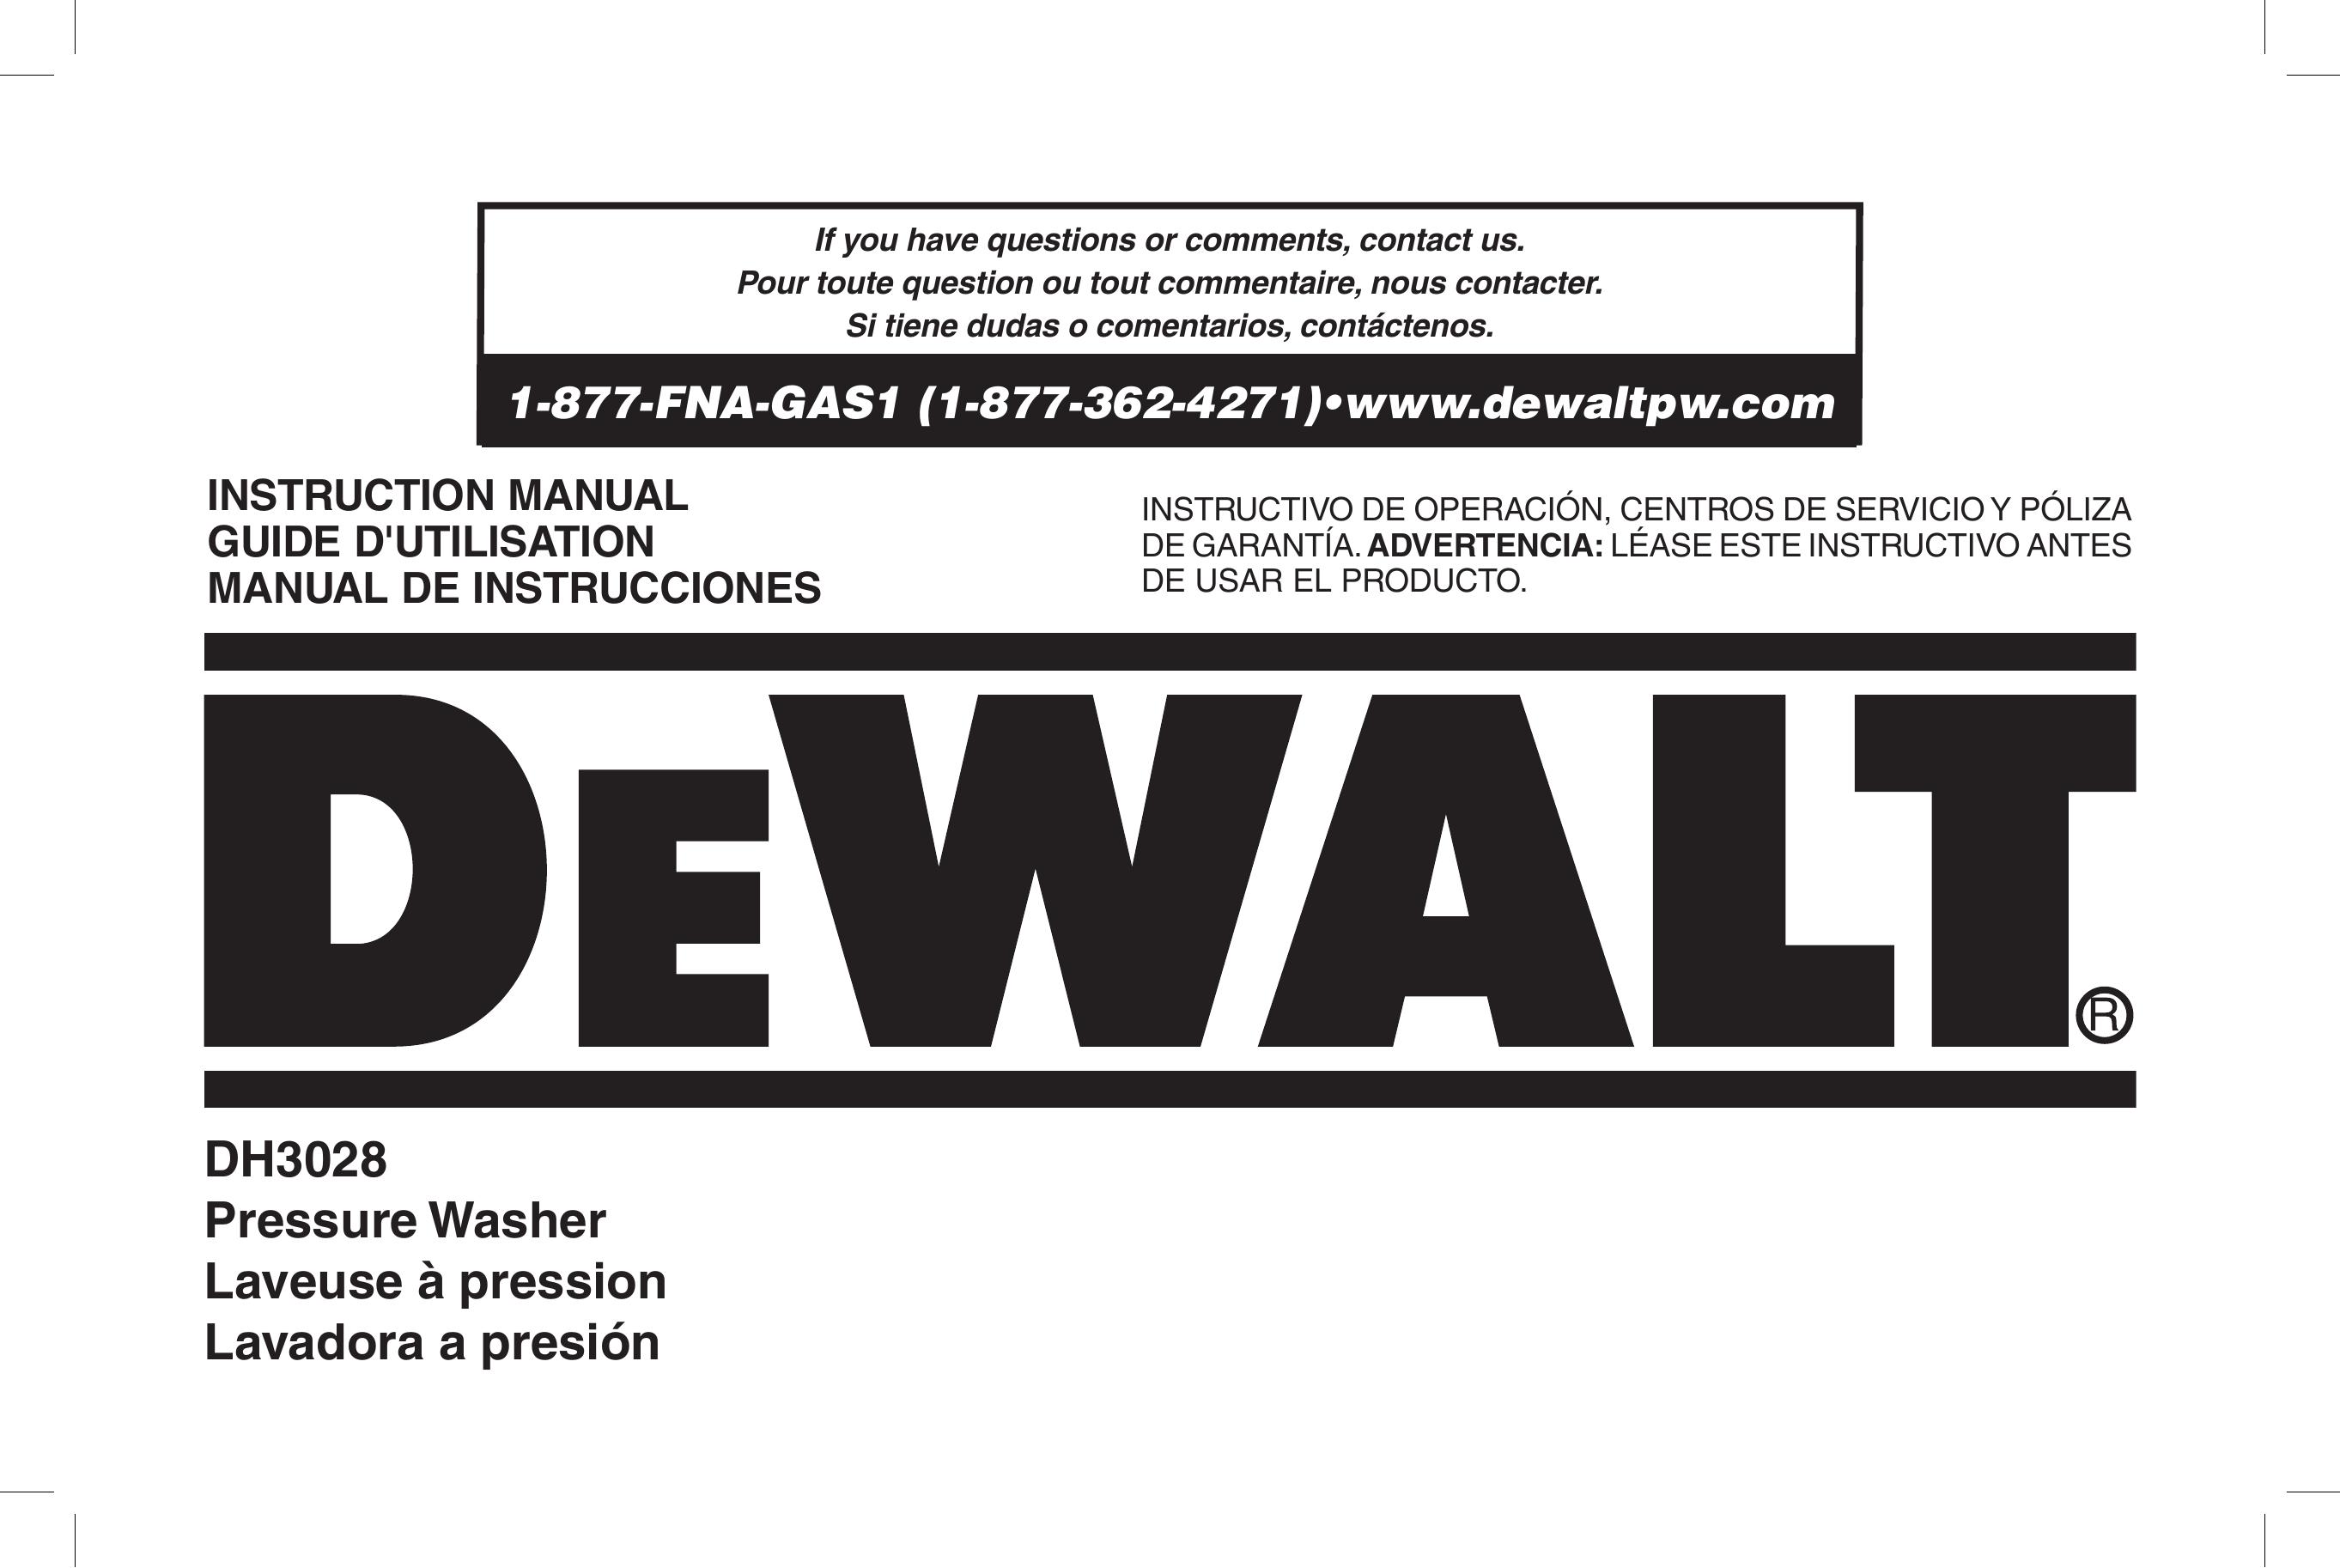 DeWalt 7103629 Pressure Washer User Manual